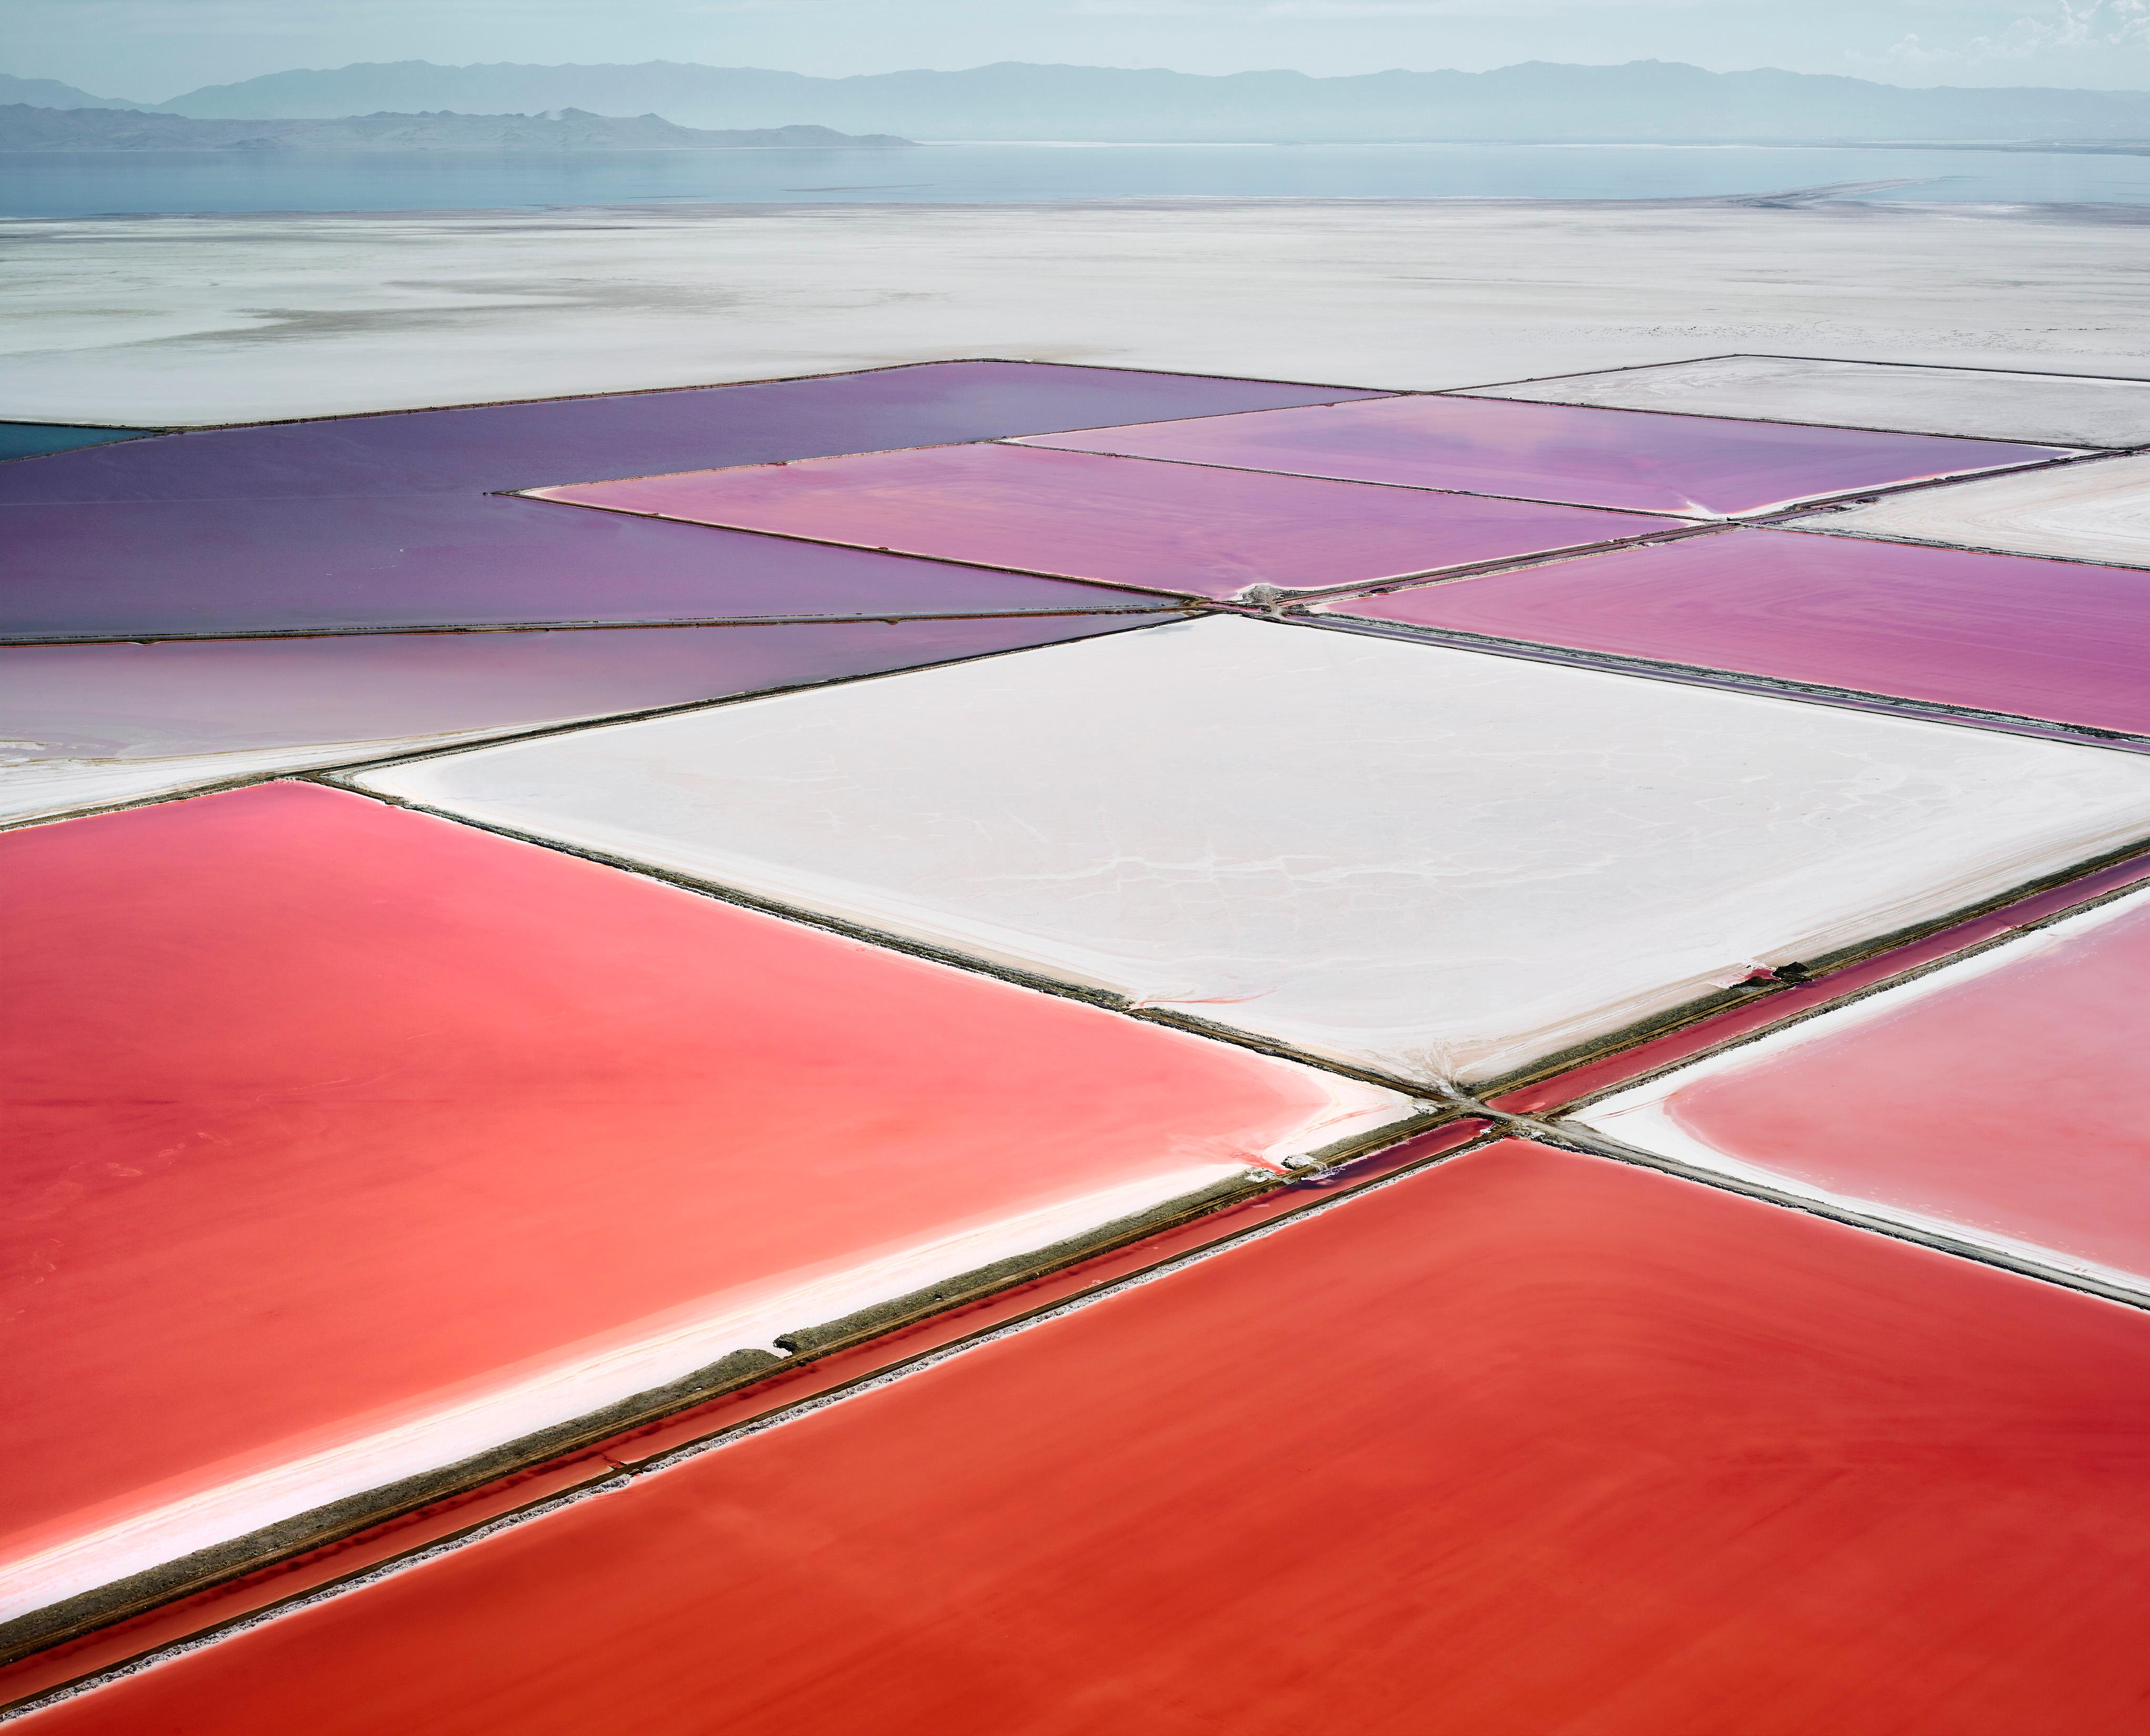 David Burdeny Landscape Photograph - Saltern Study 14, Great Salt Lake, UT (32” x 40”)